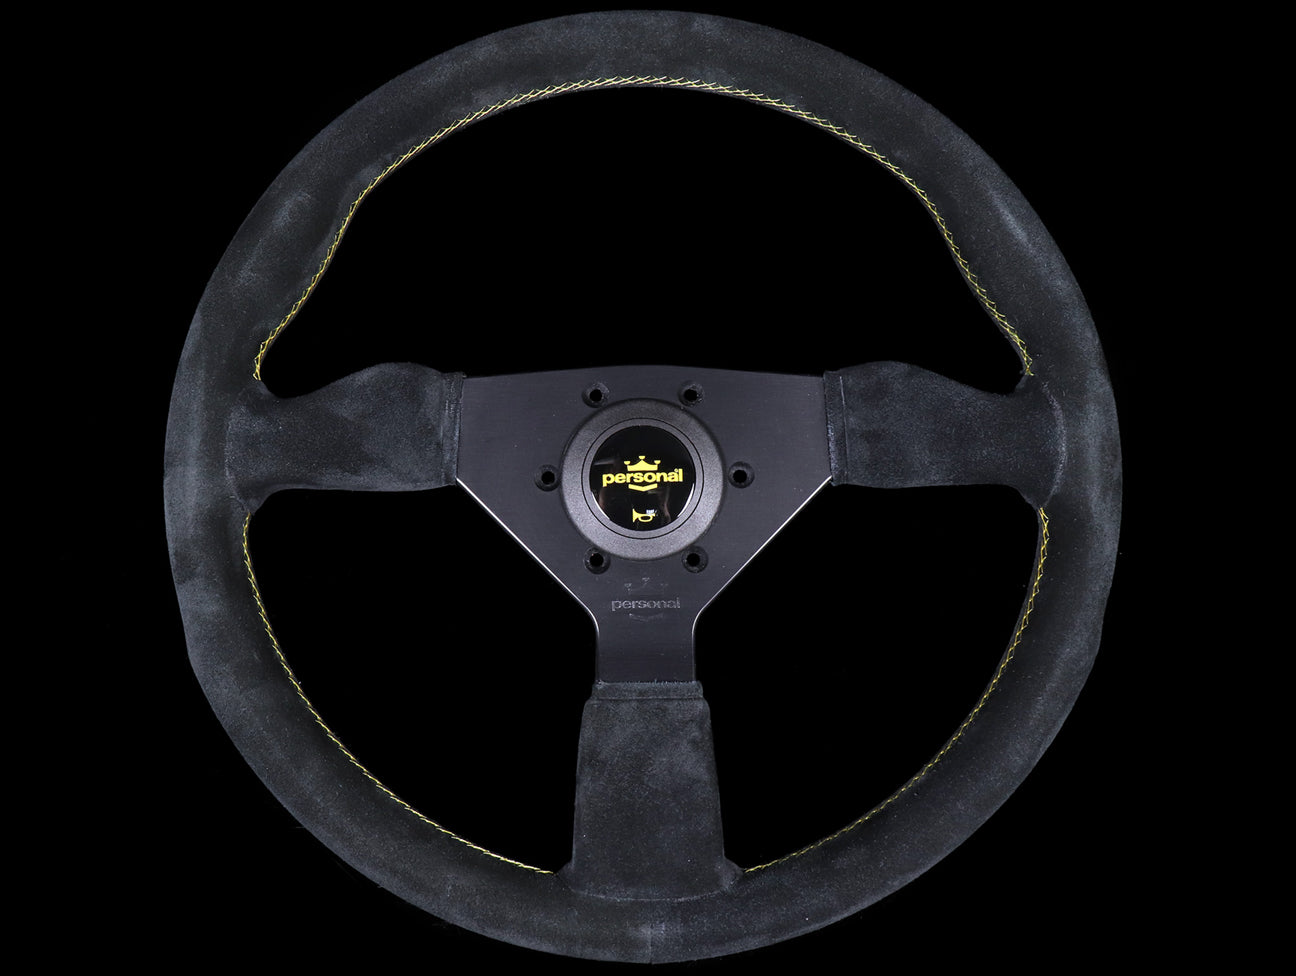 Personal Grinta 330mm Steering Wheel - Black Suede / Yellow Stitch